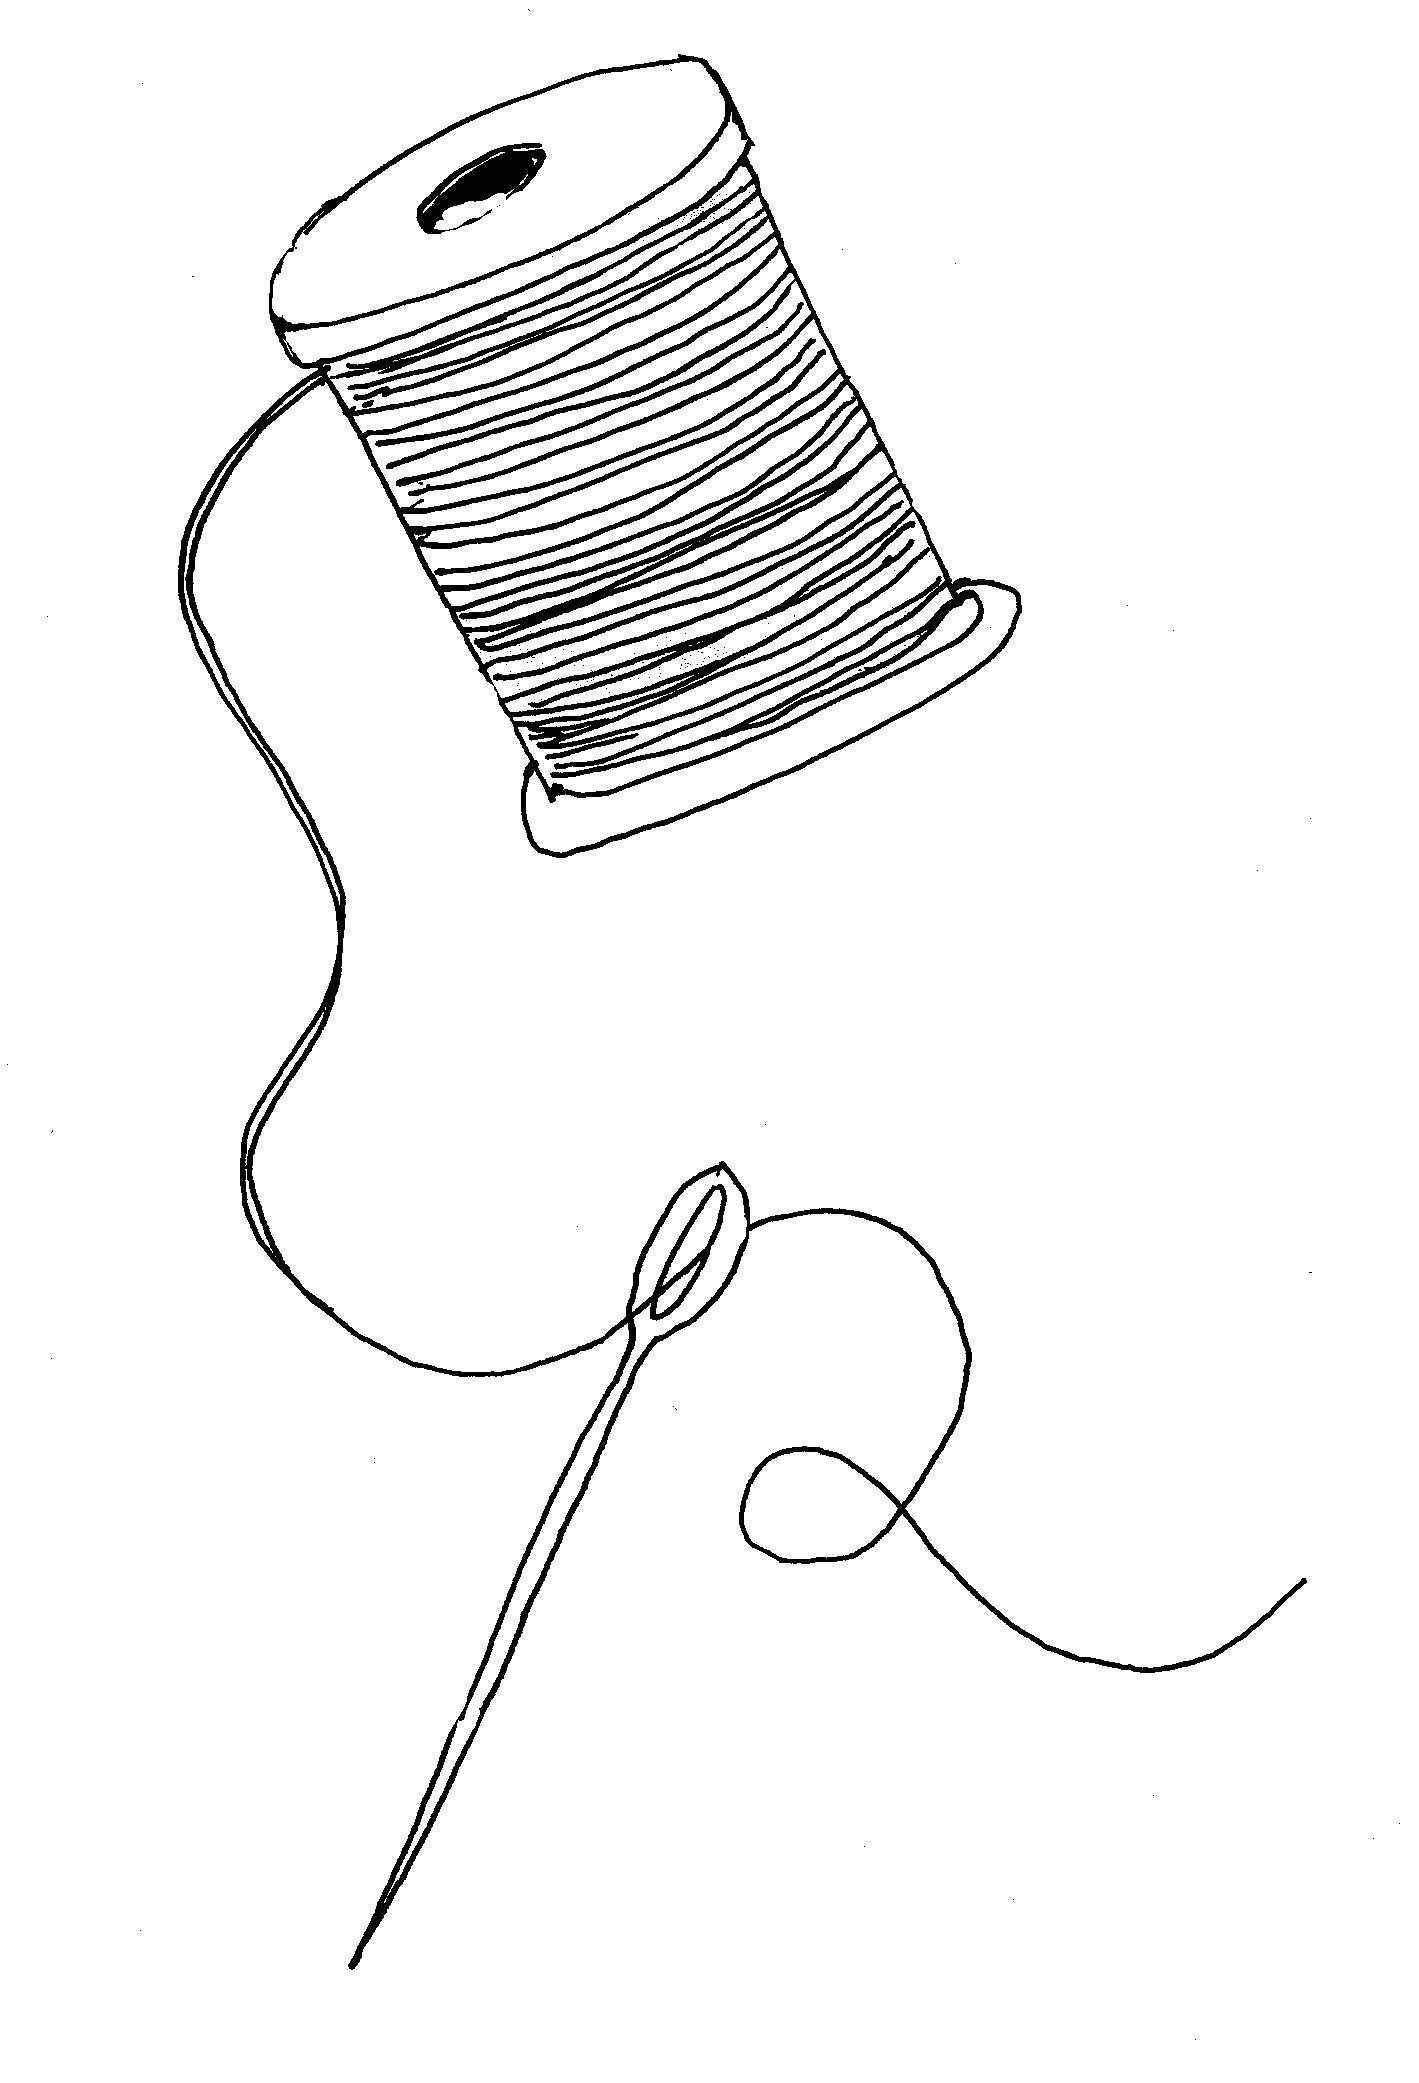 needle thread: a illustration